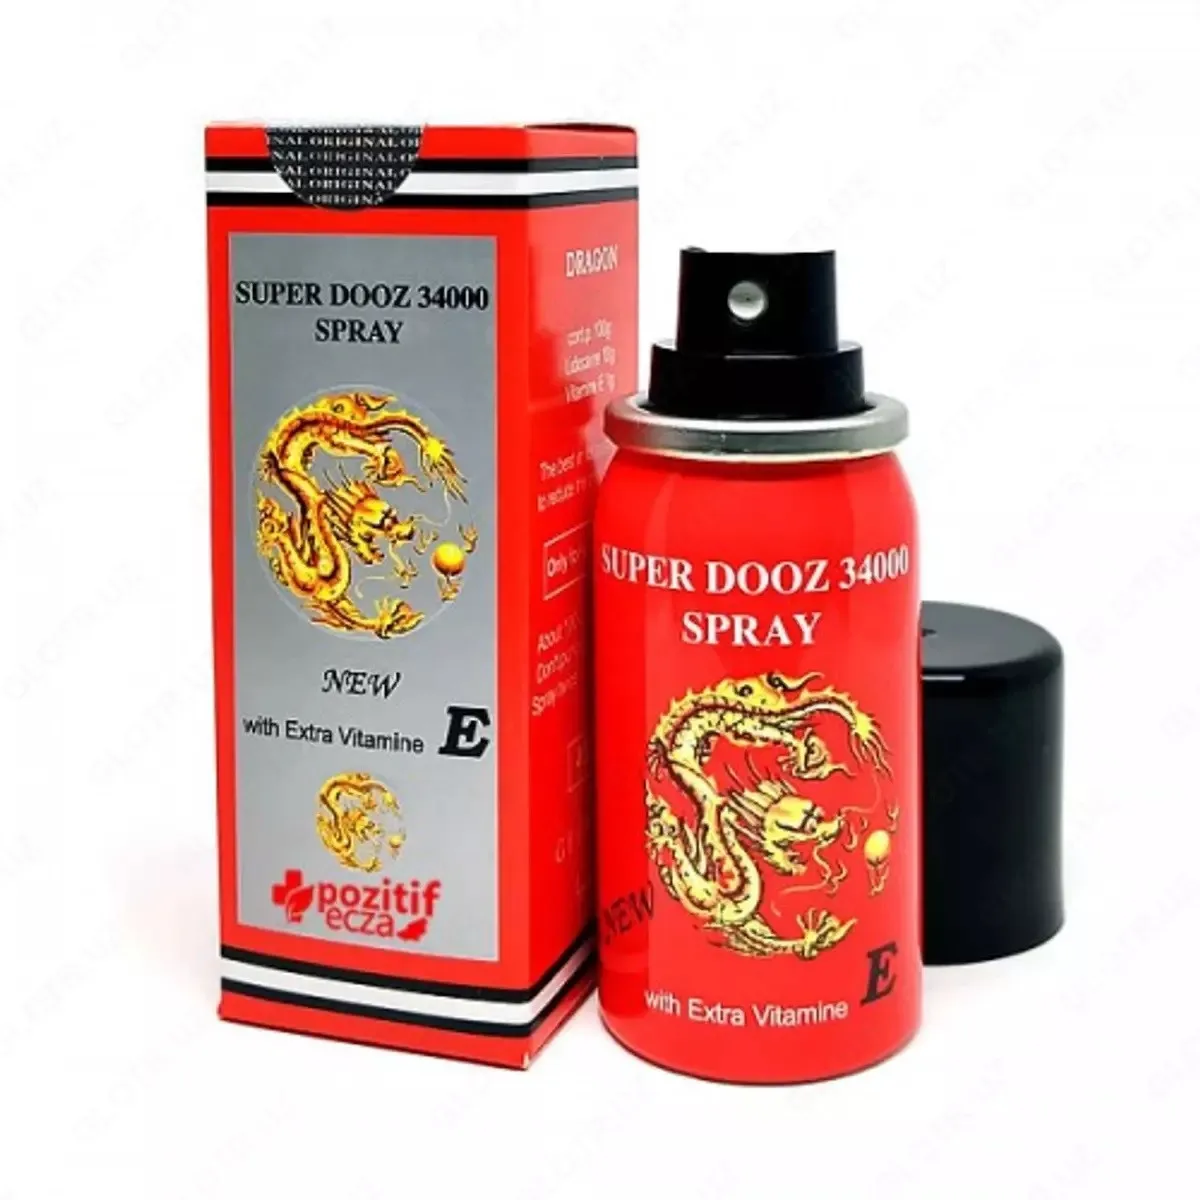 Spray prolonator Super Dooz 34000 Dragon's Spray E vitamini bilan 45 ml#2